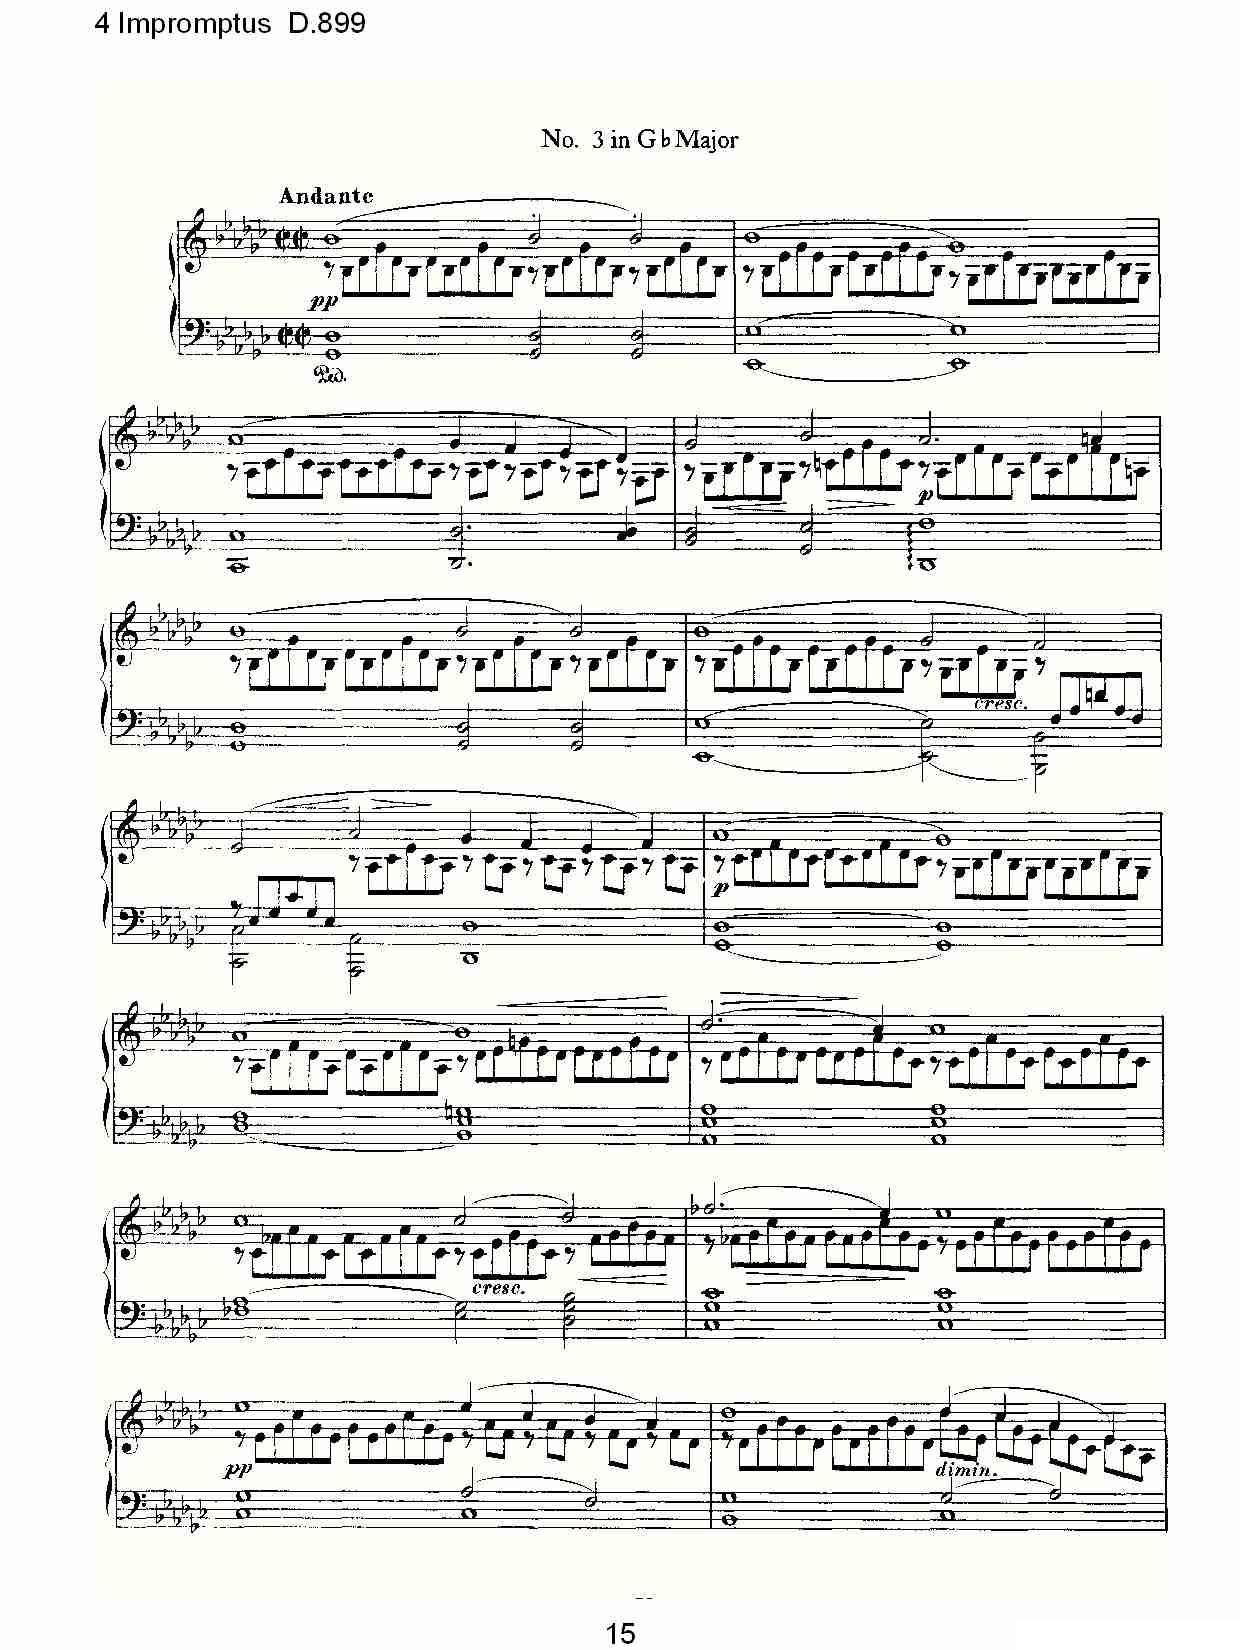 4 Impromptus D.899（4人即兴演奏 D.899）钢琴曲谱（图15）